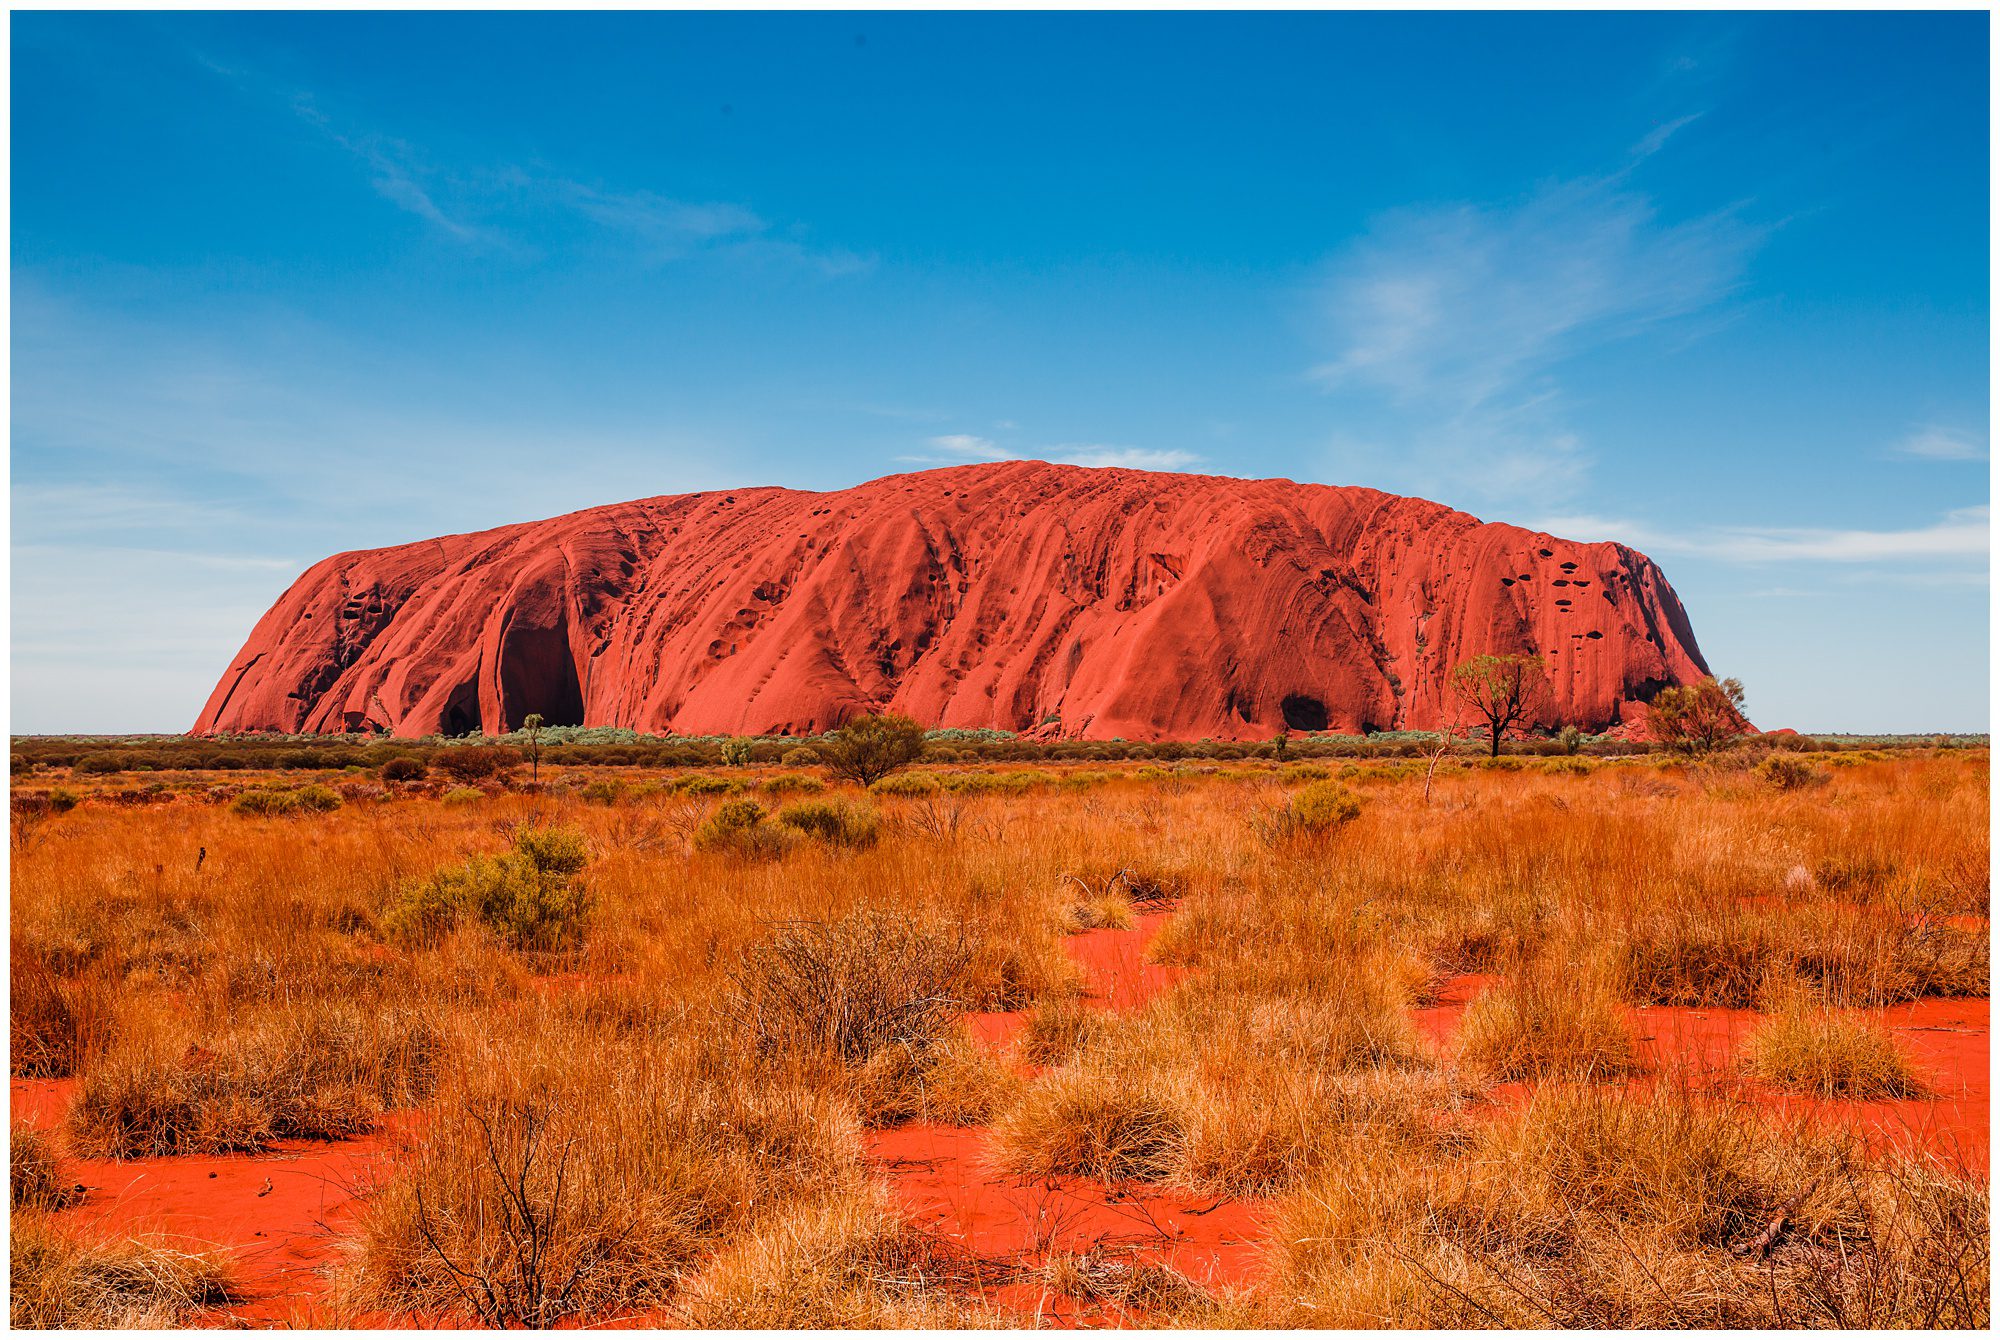 Photograph of Uluru 4 - Red Rock